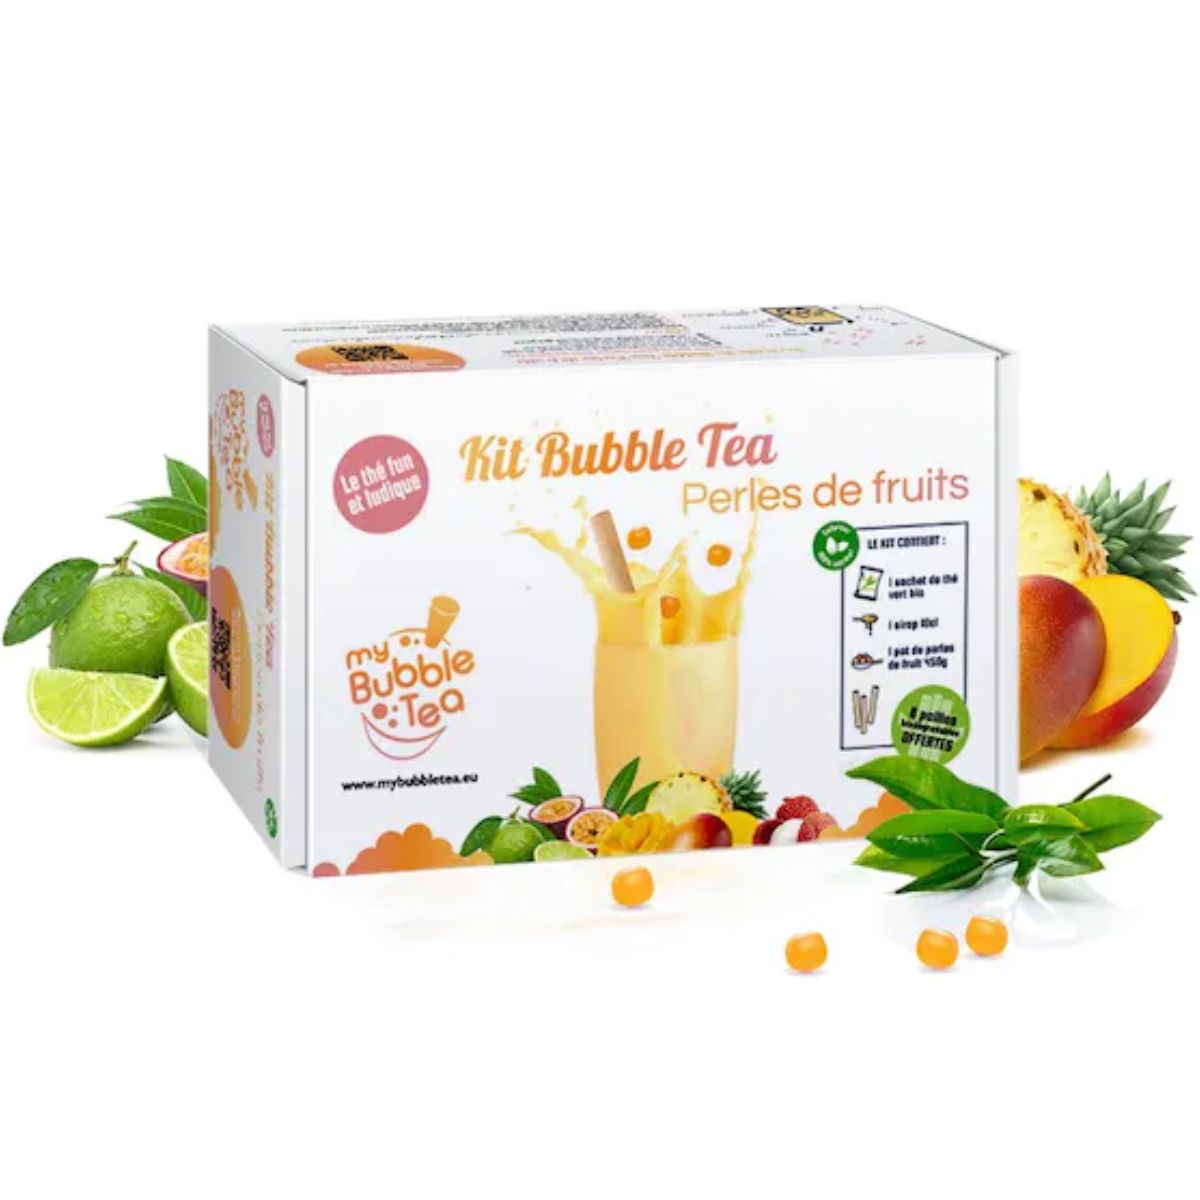 Kit Bubble Tea Mango Fruit Pearls